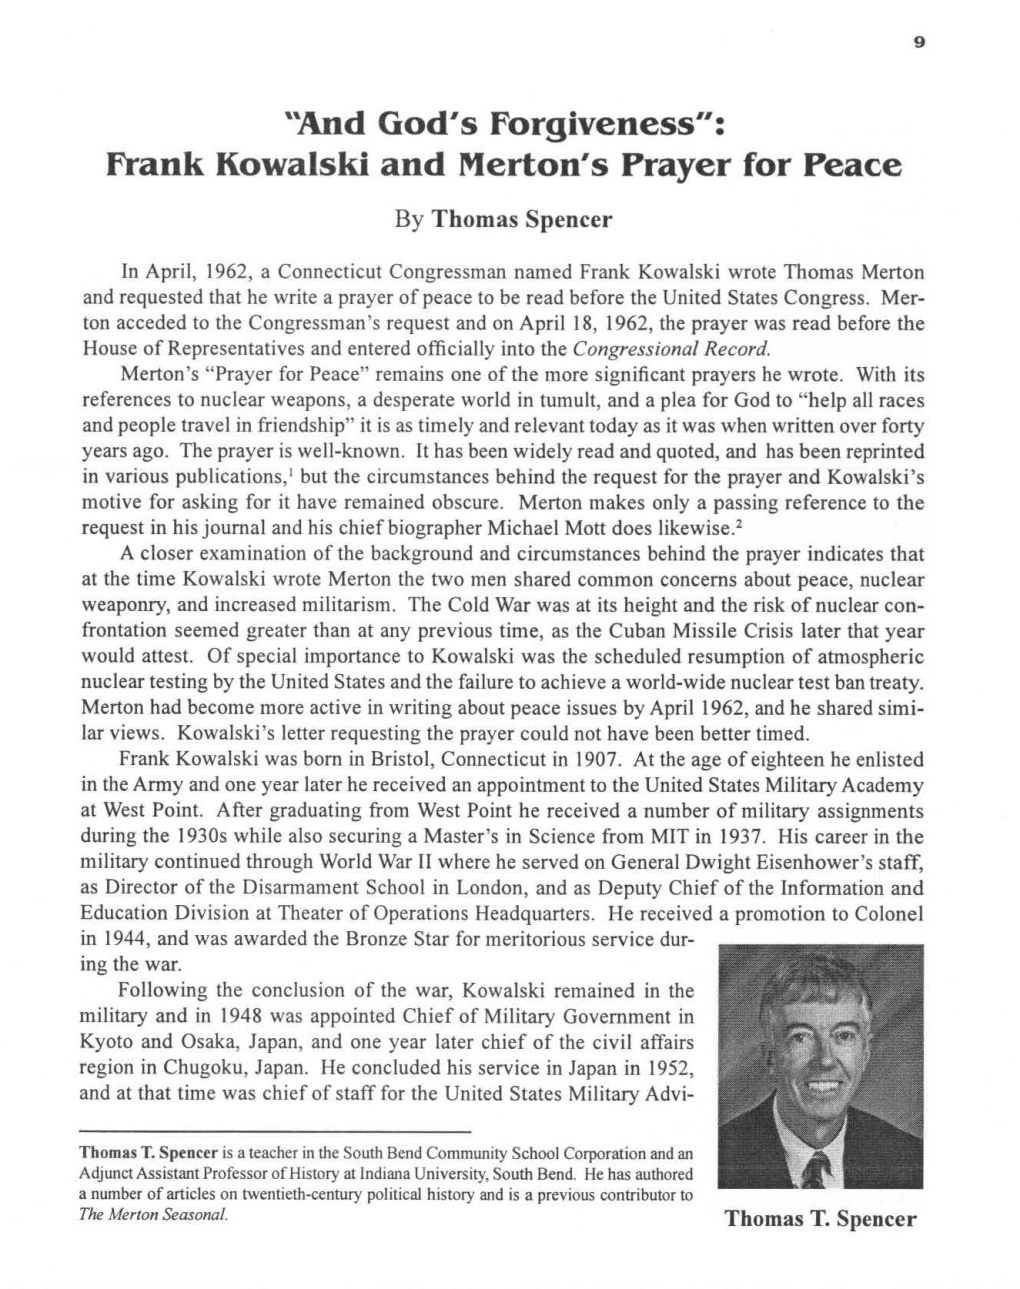 "And God's Forgiveness": Frank Kowalski and Merton's Prayer for Peace